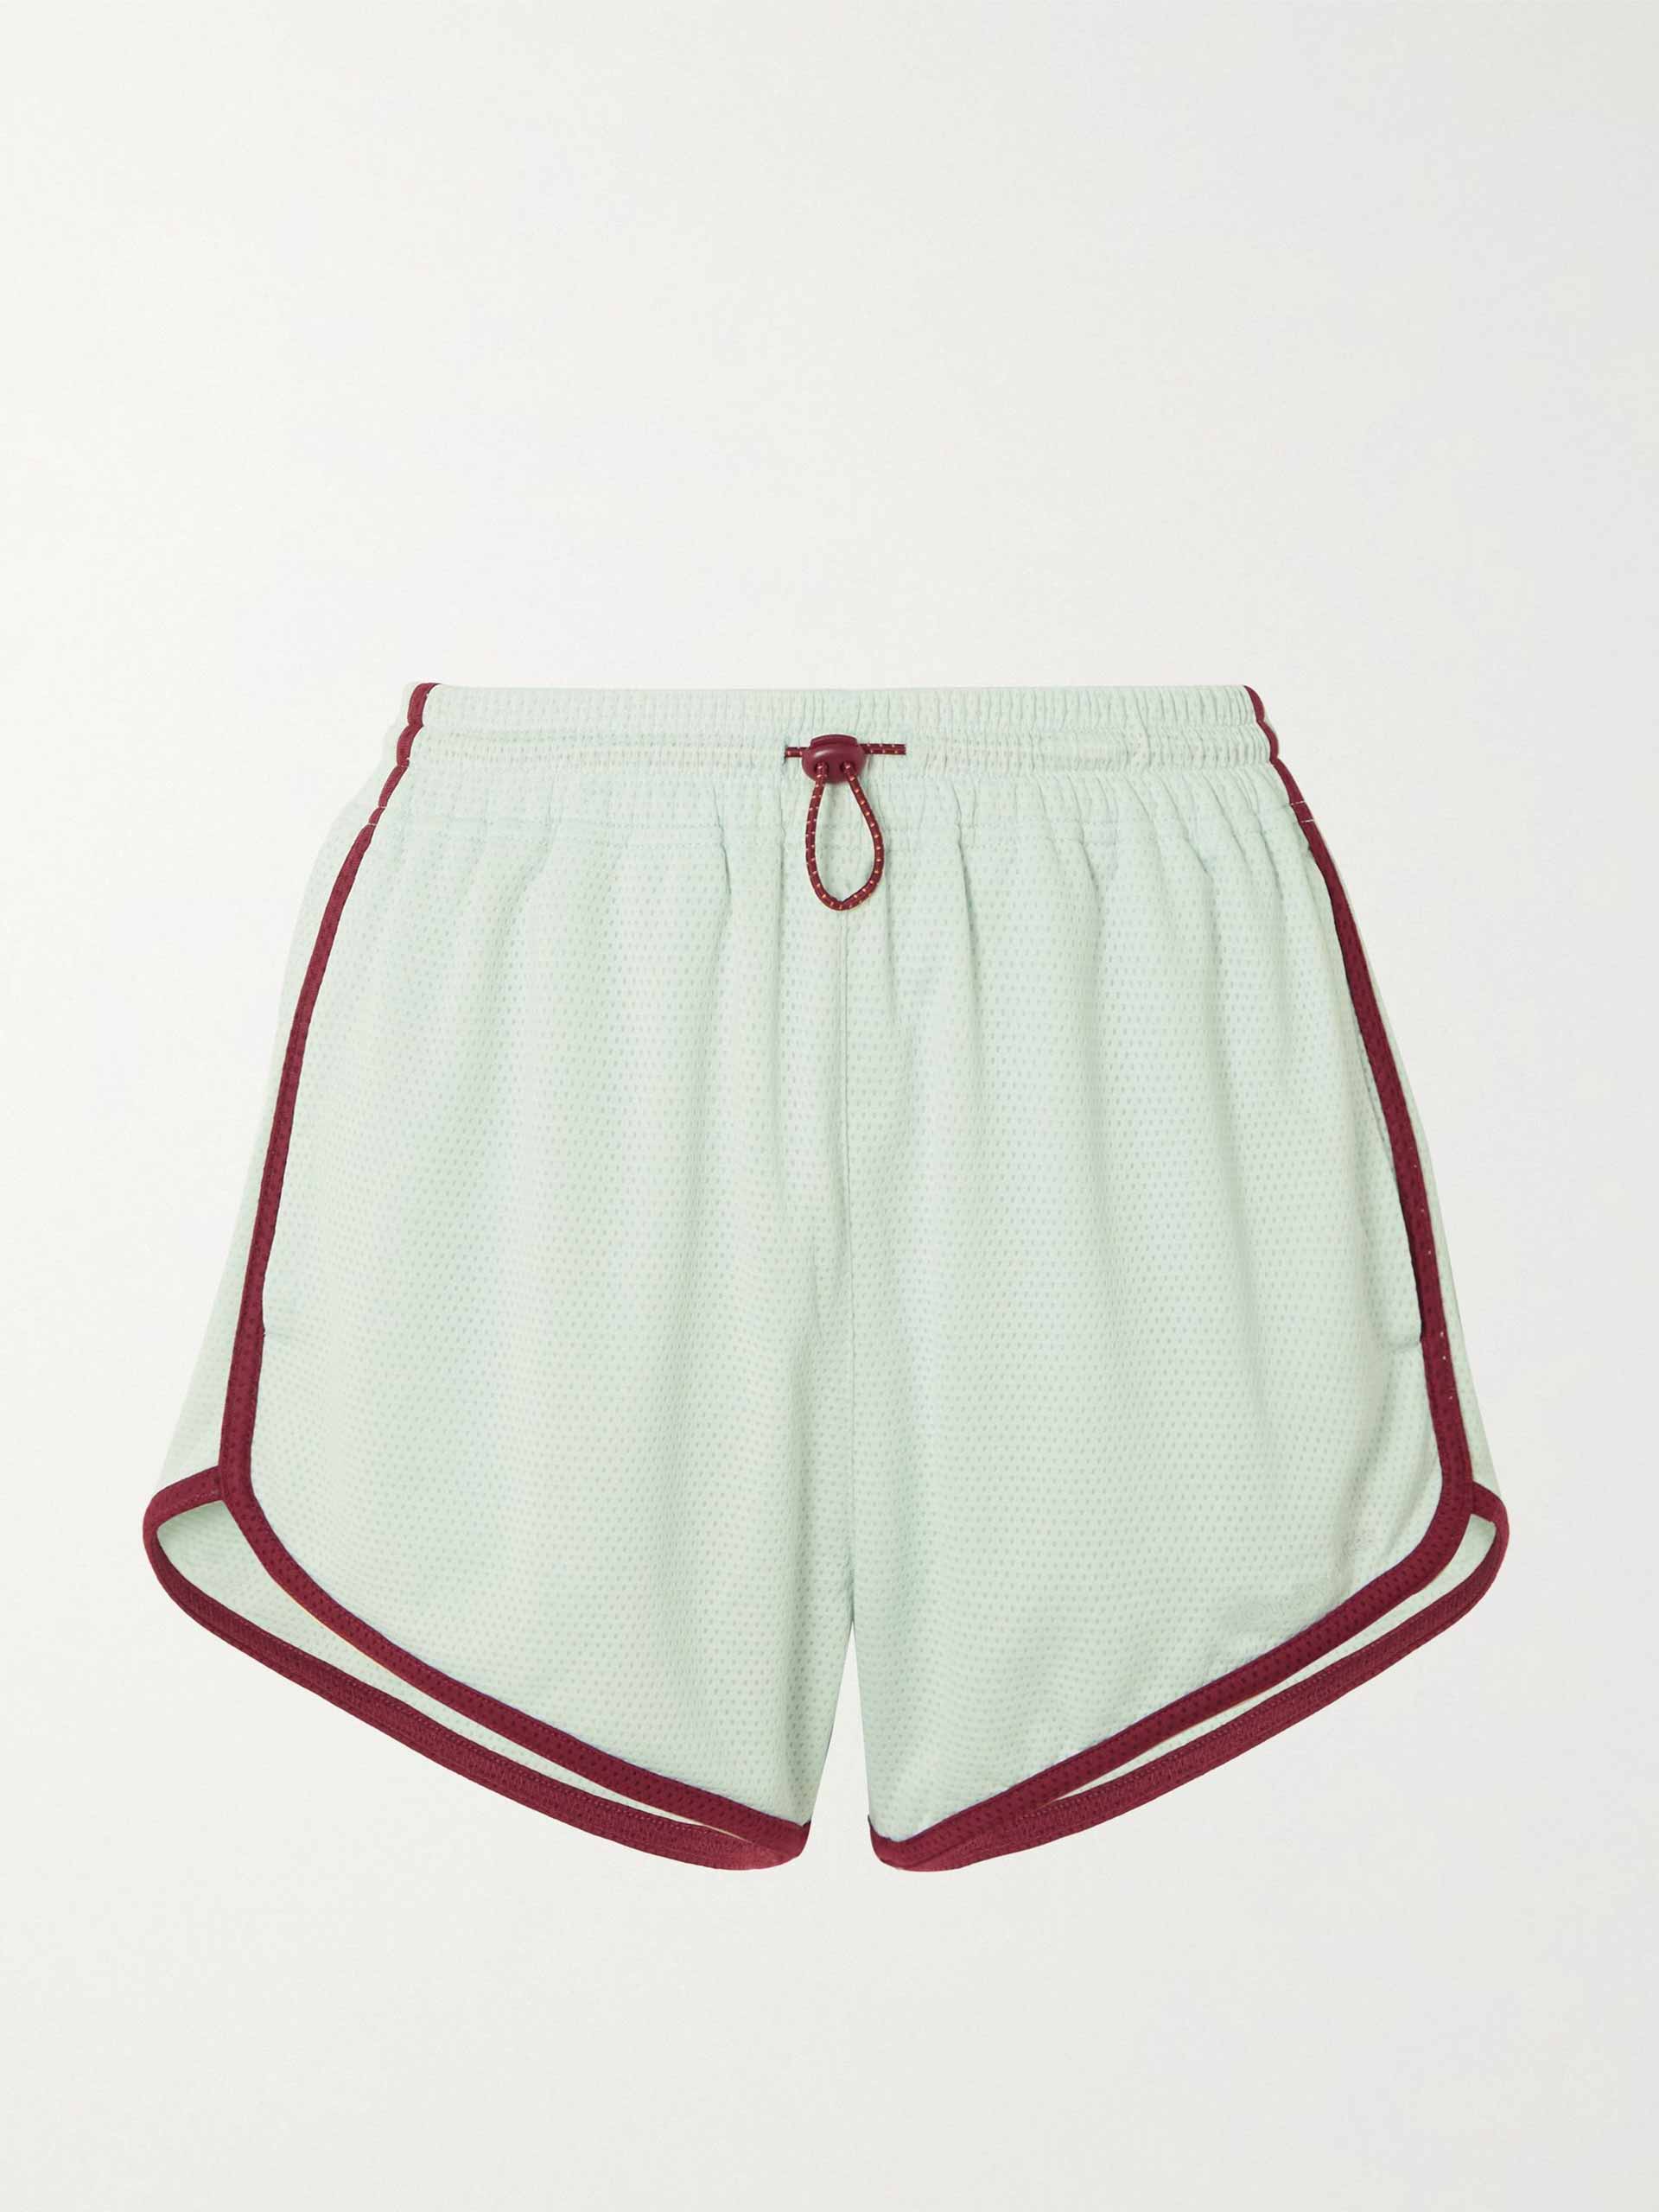 Mint green and burgundy stretch-mesh shorts